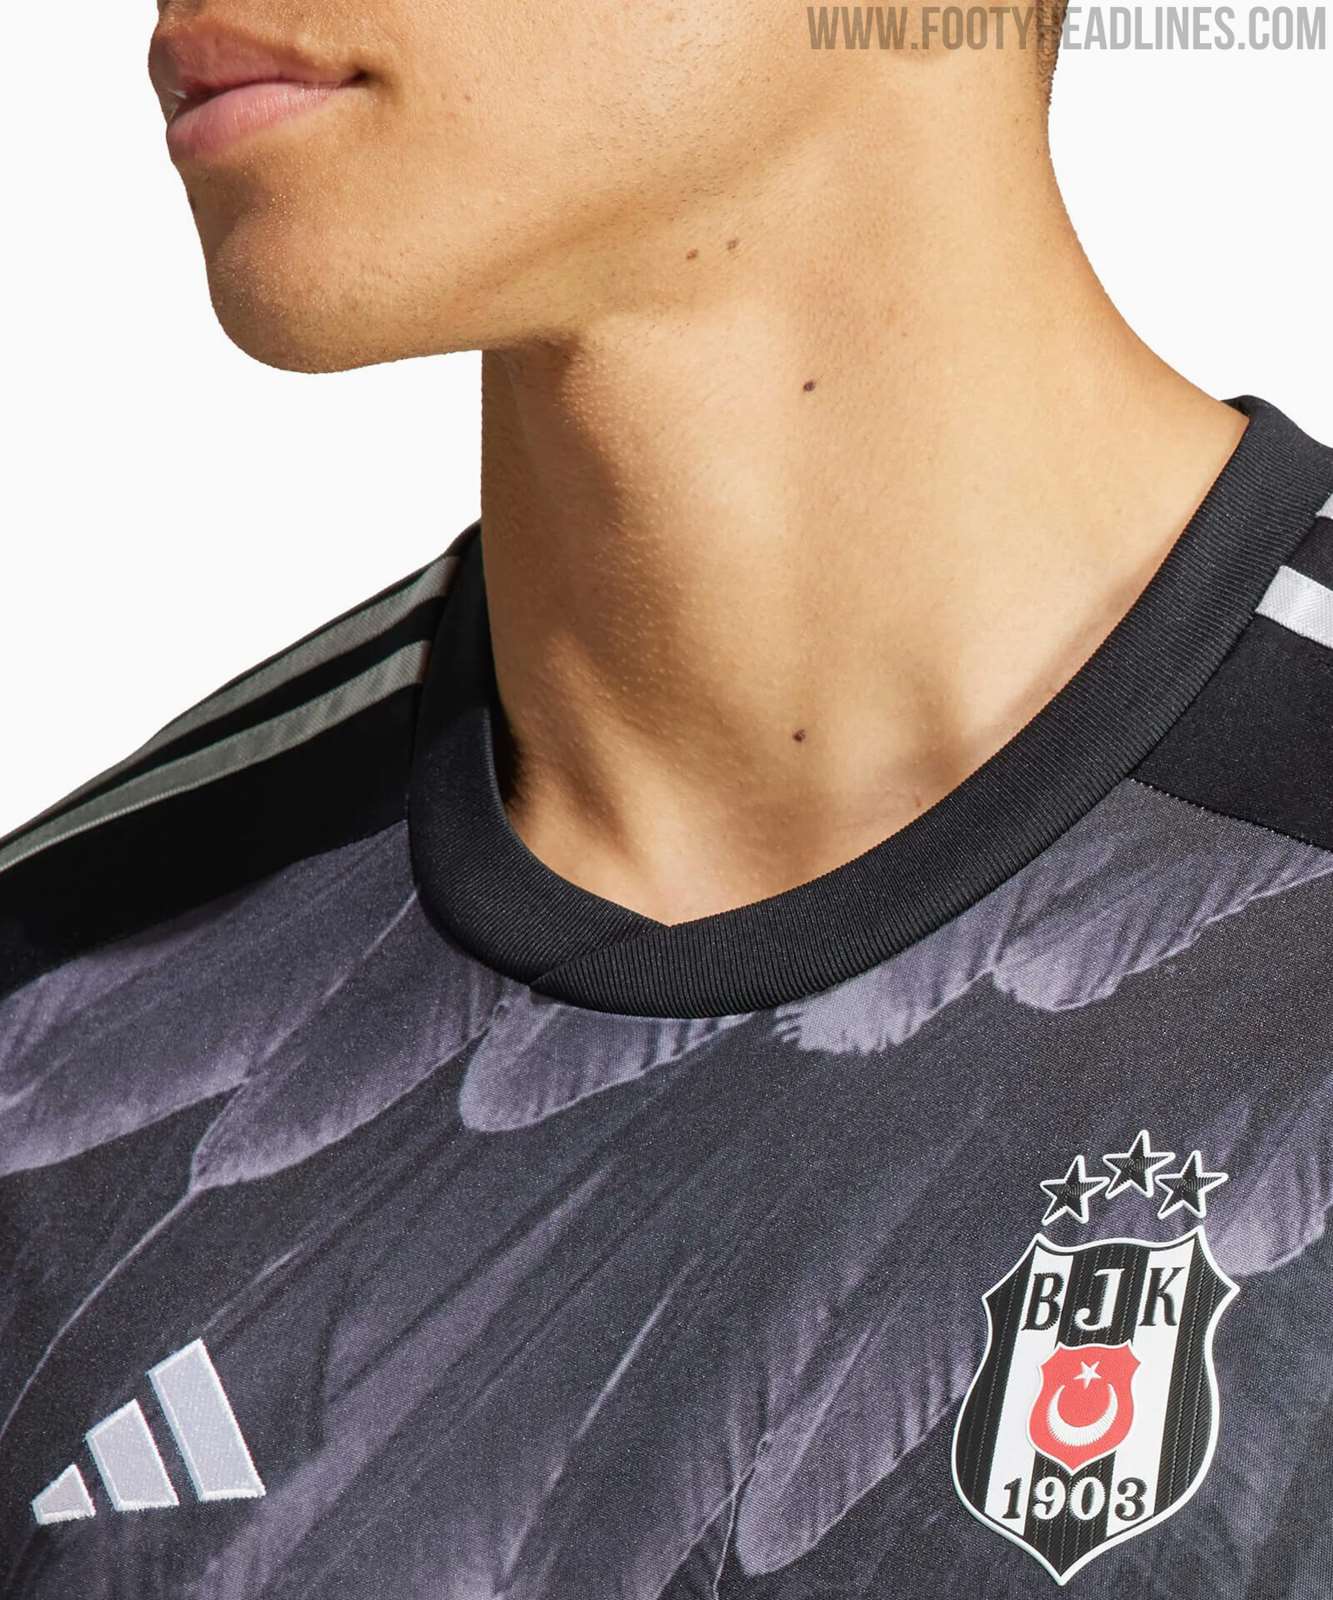 Besiktas Reveal 23/24 adidas Home, Away & Third Shirts - SoccerBible